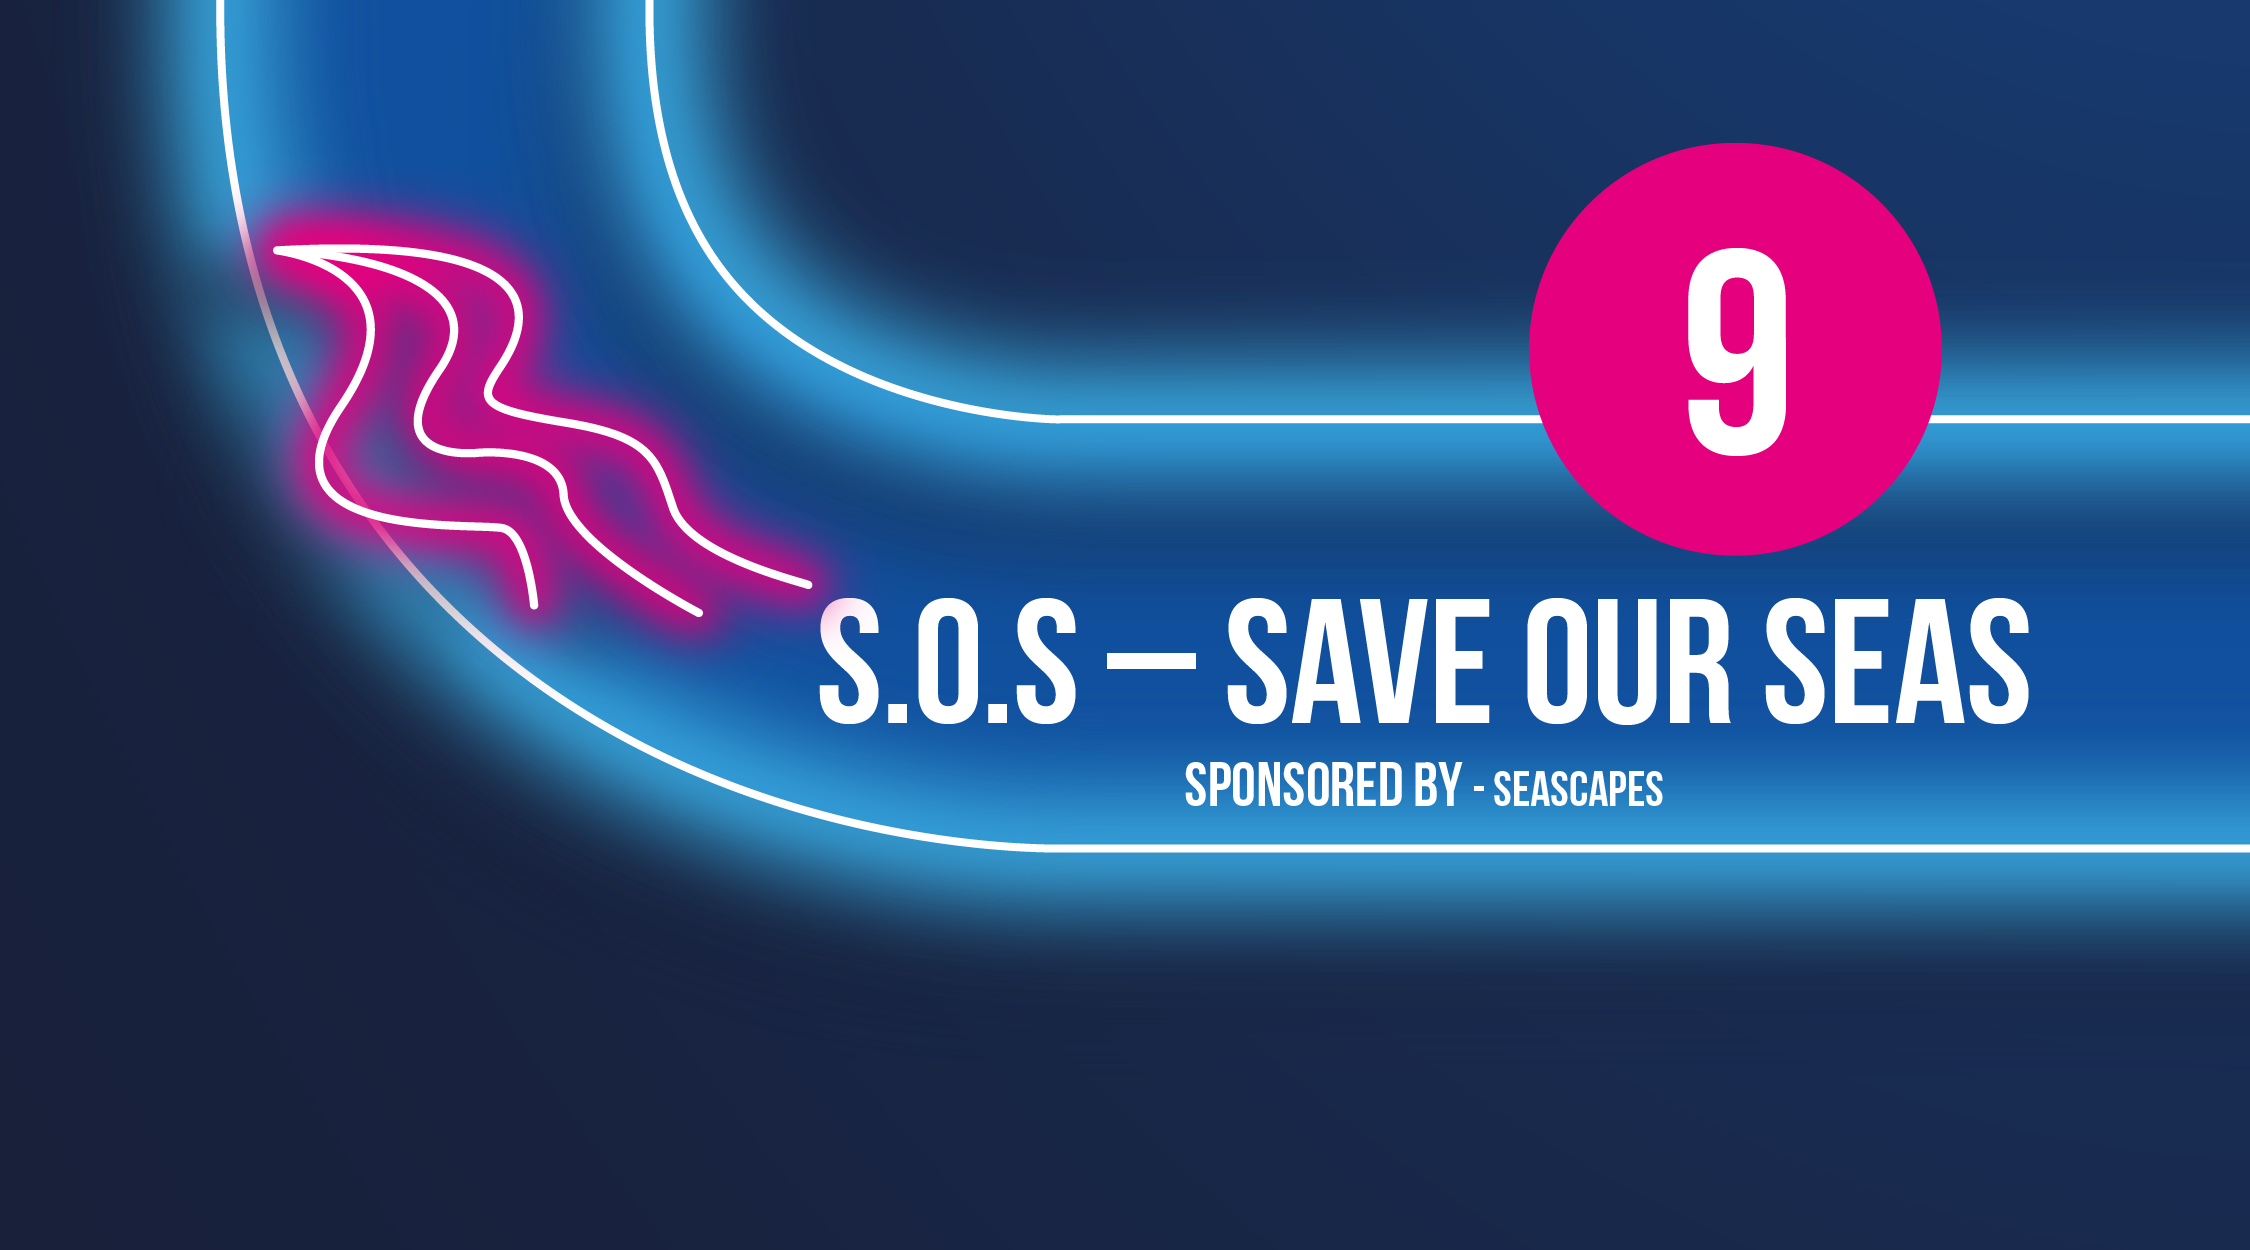 S.O.S. - Save our seas